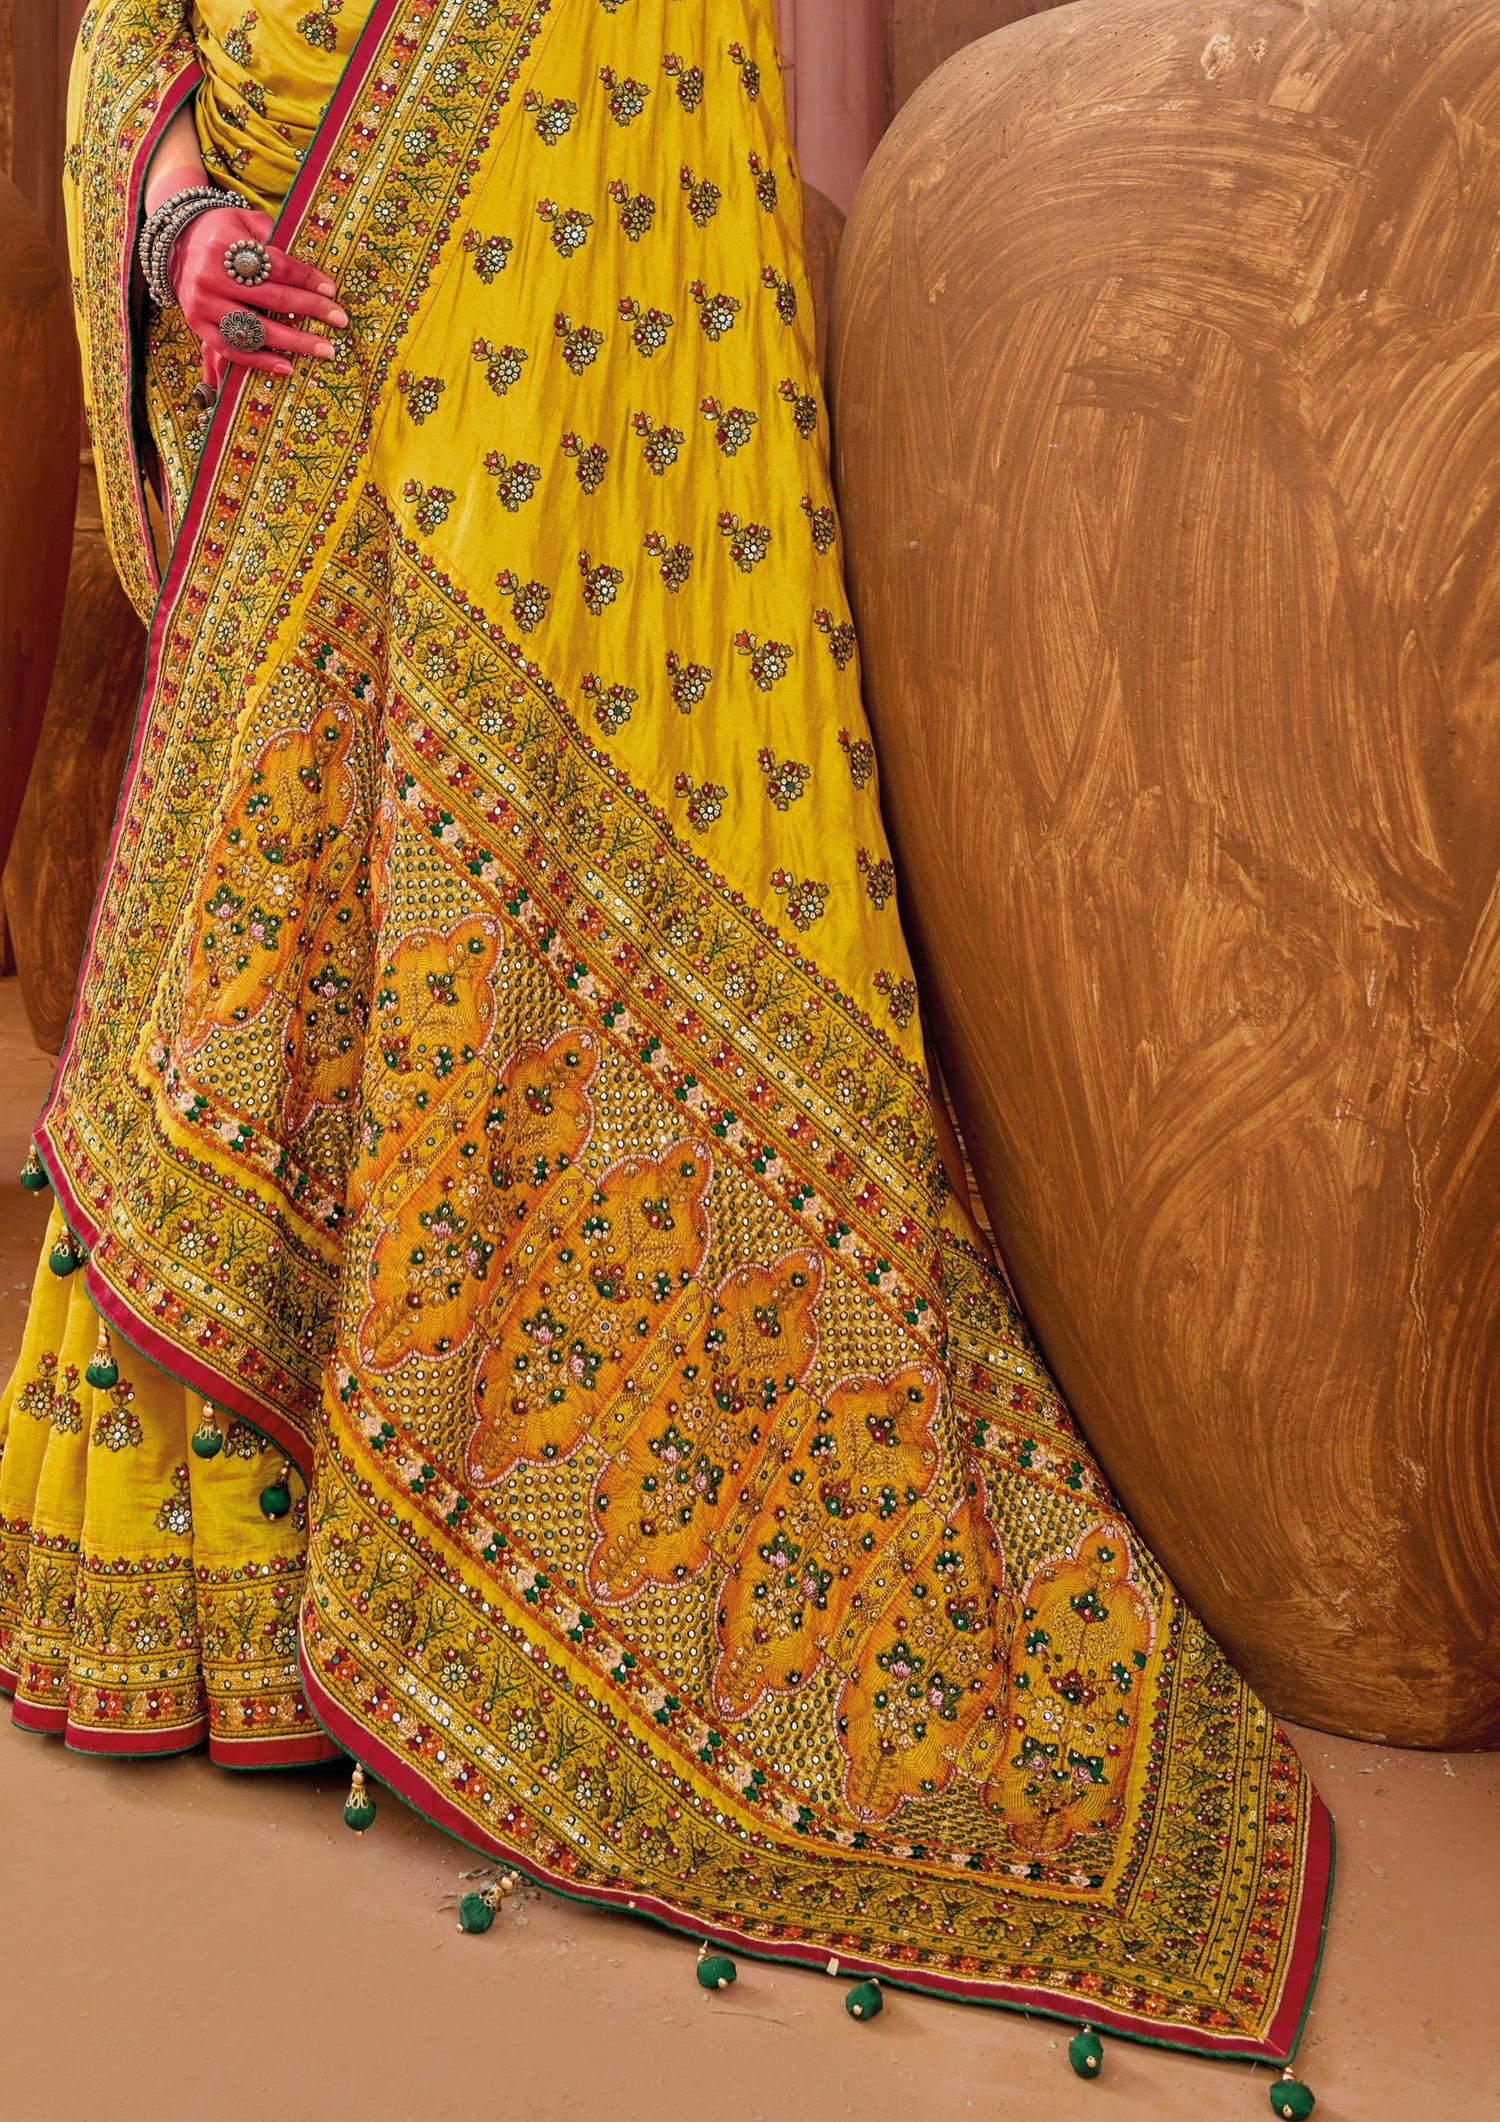 Kutch mirror work embroidery saree design online shopping price india uk usa.